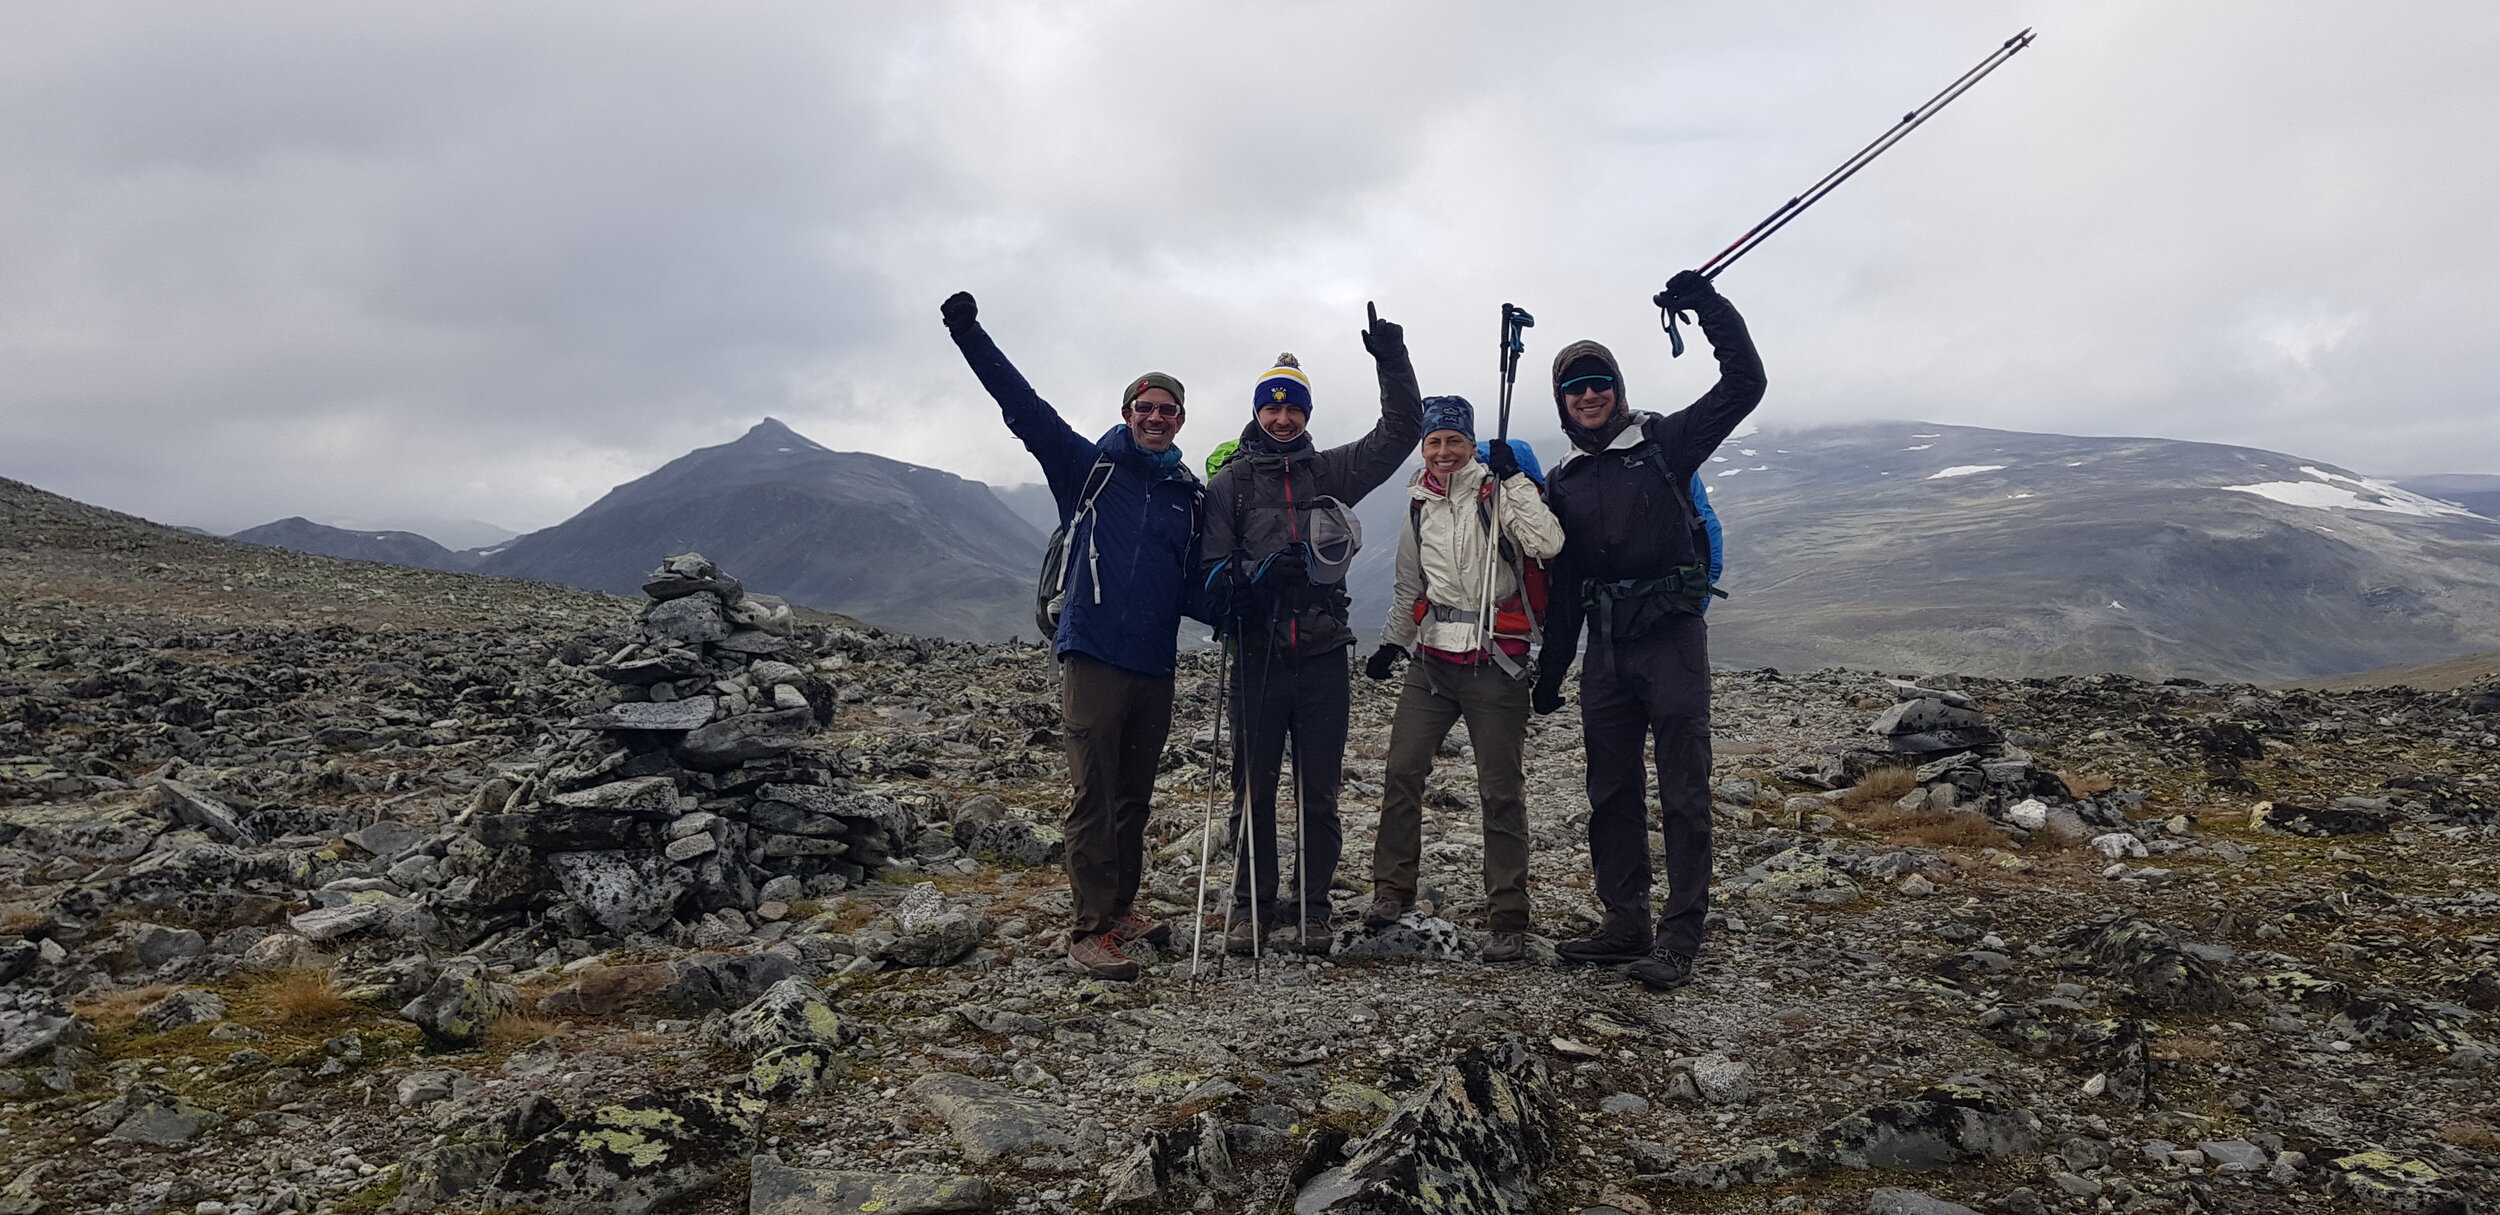 Hut to Hut Hiking in Norway's Jotunheimen Pathways Active Travel